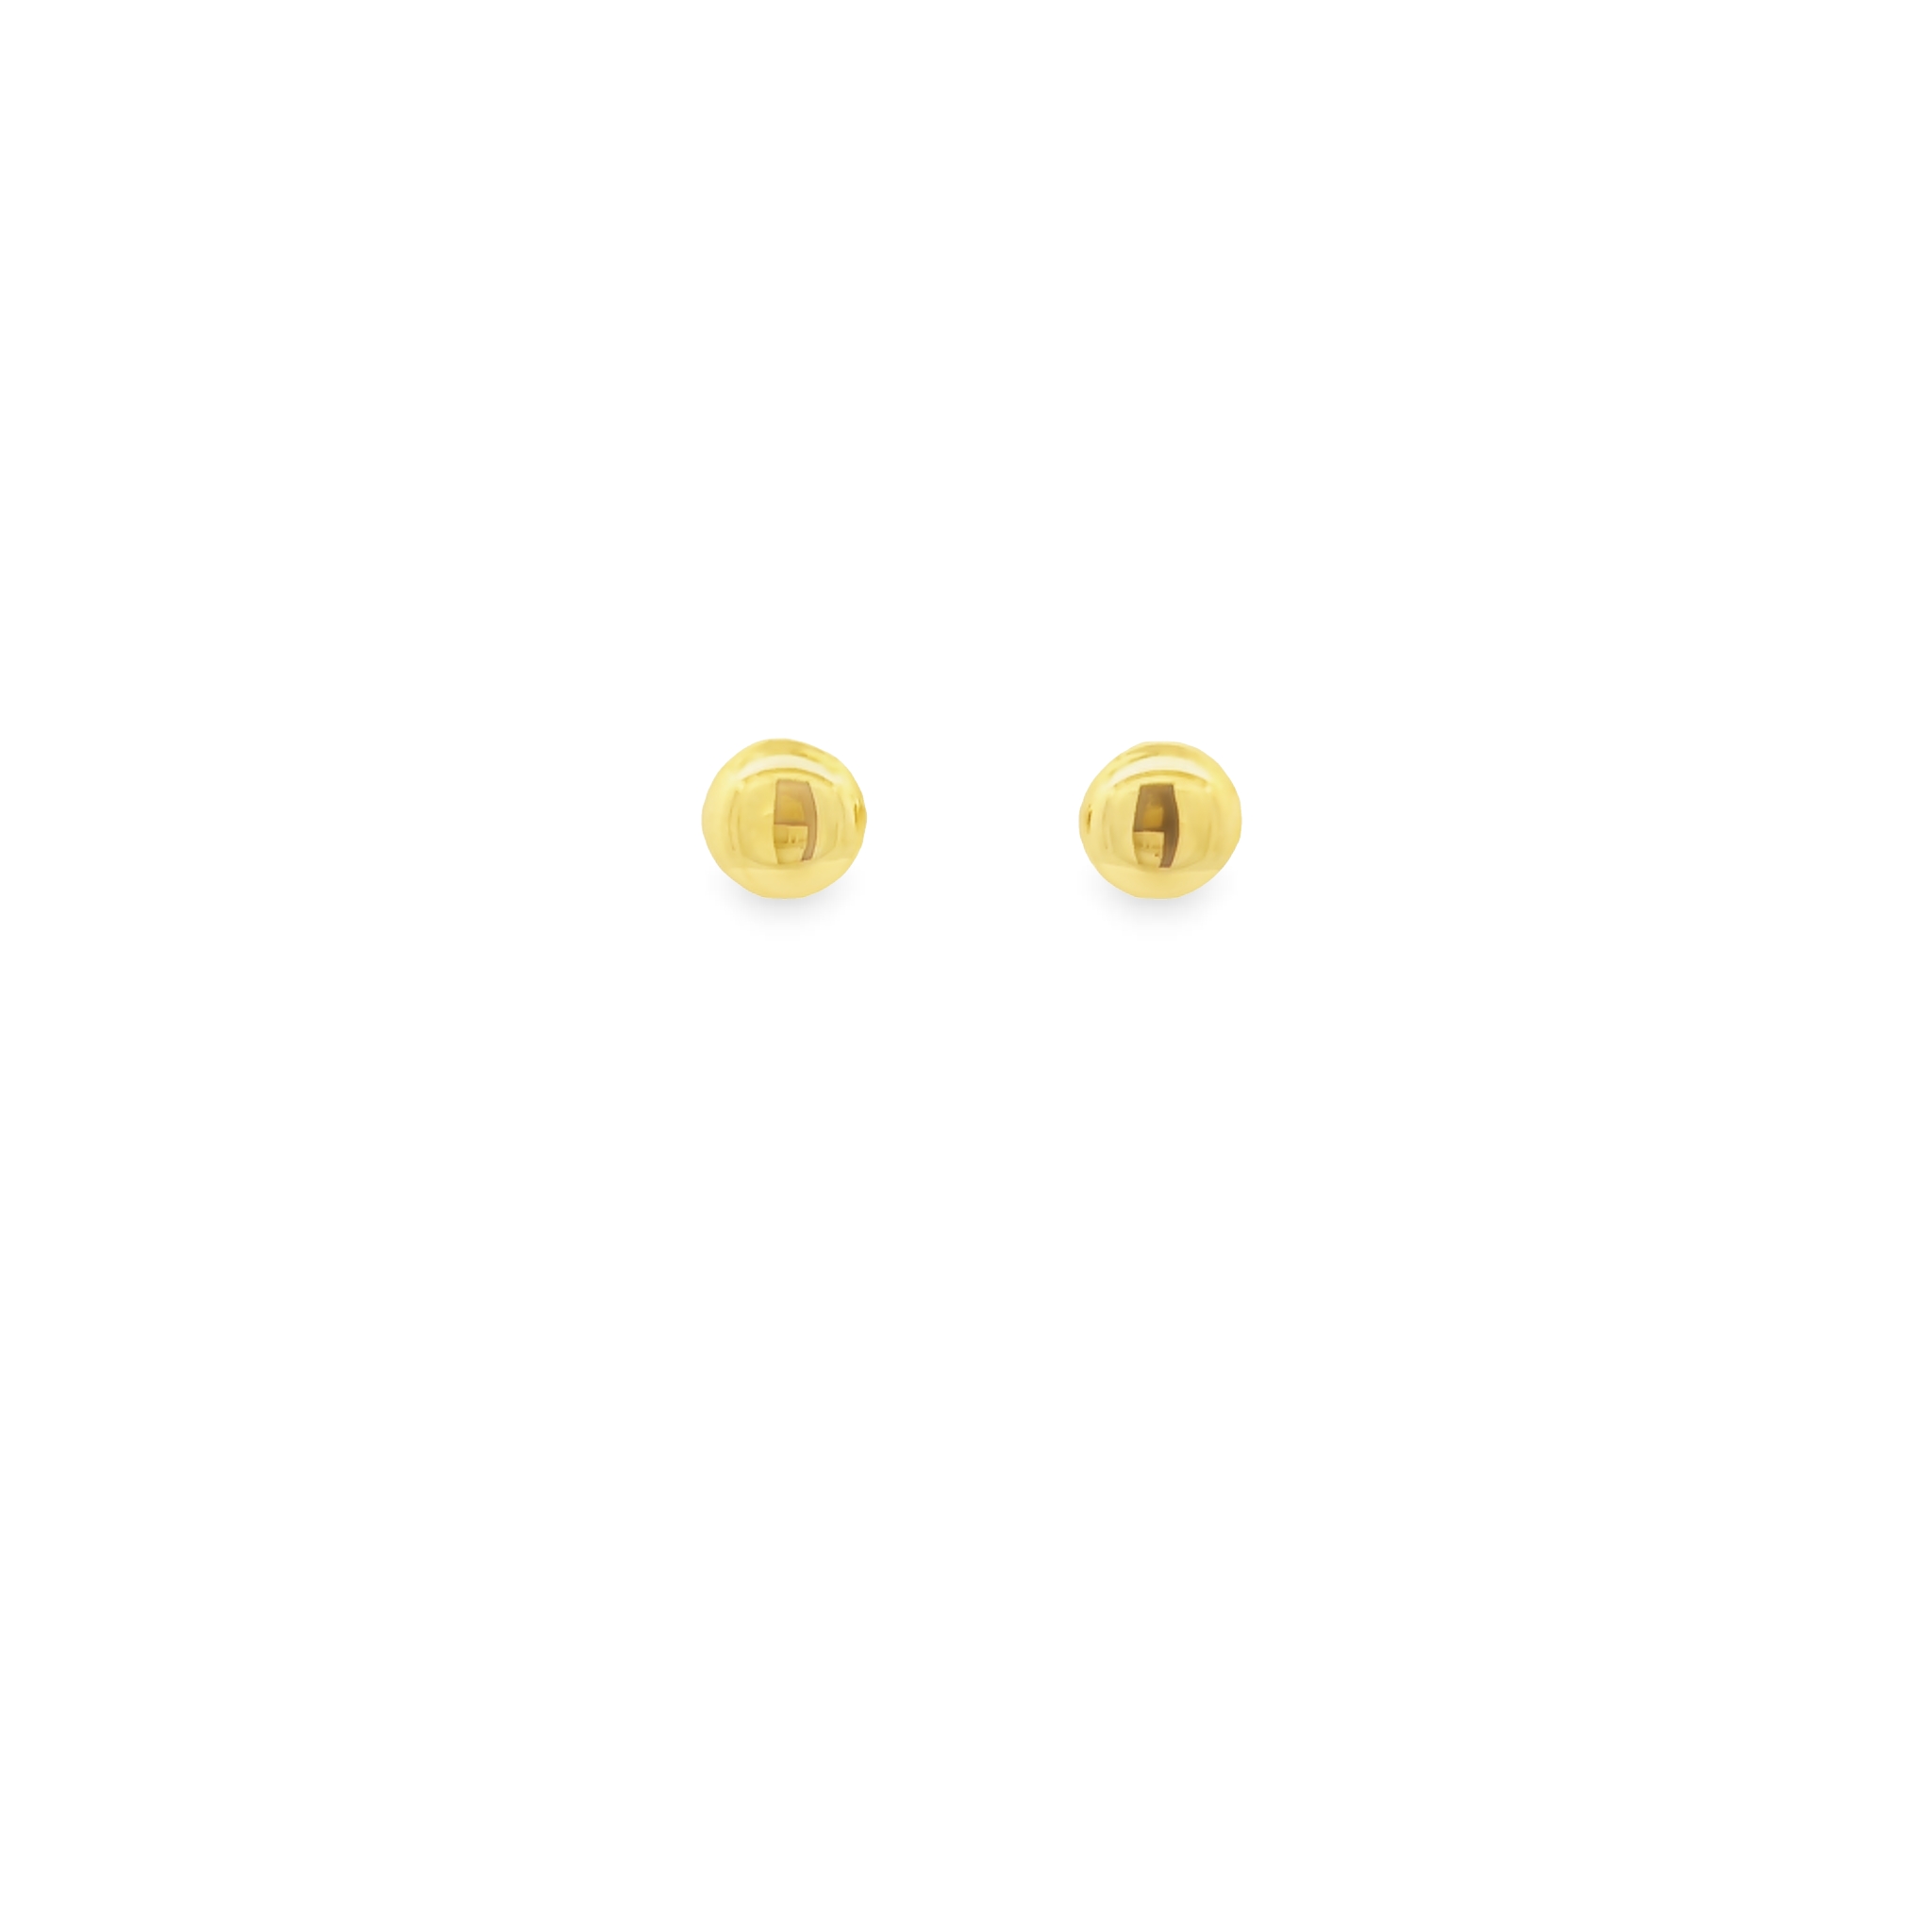 8mm 14k Yellow Gold Button Stud Earrings